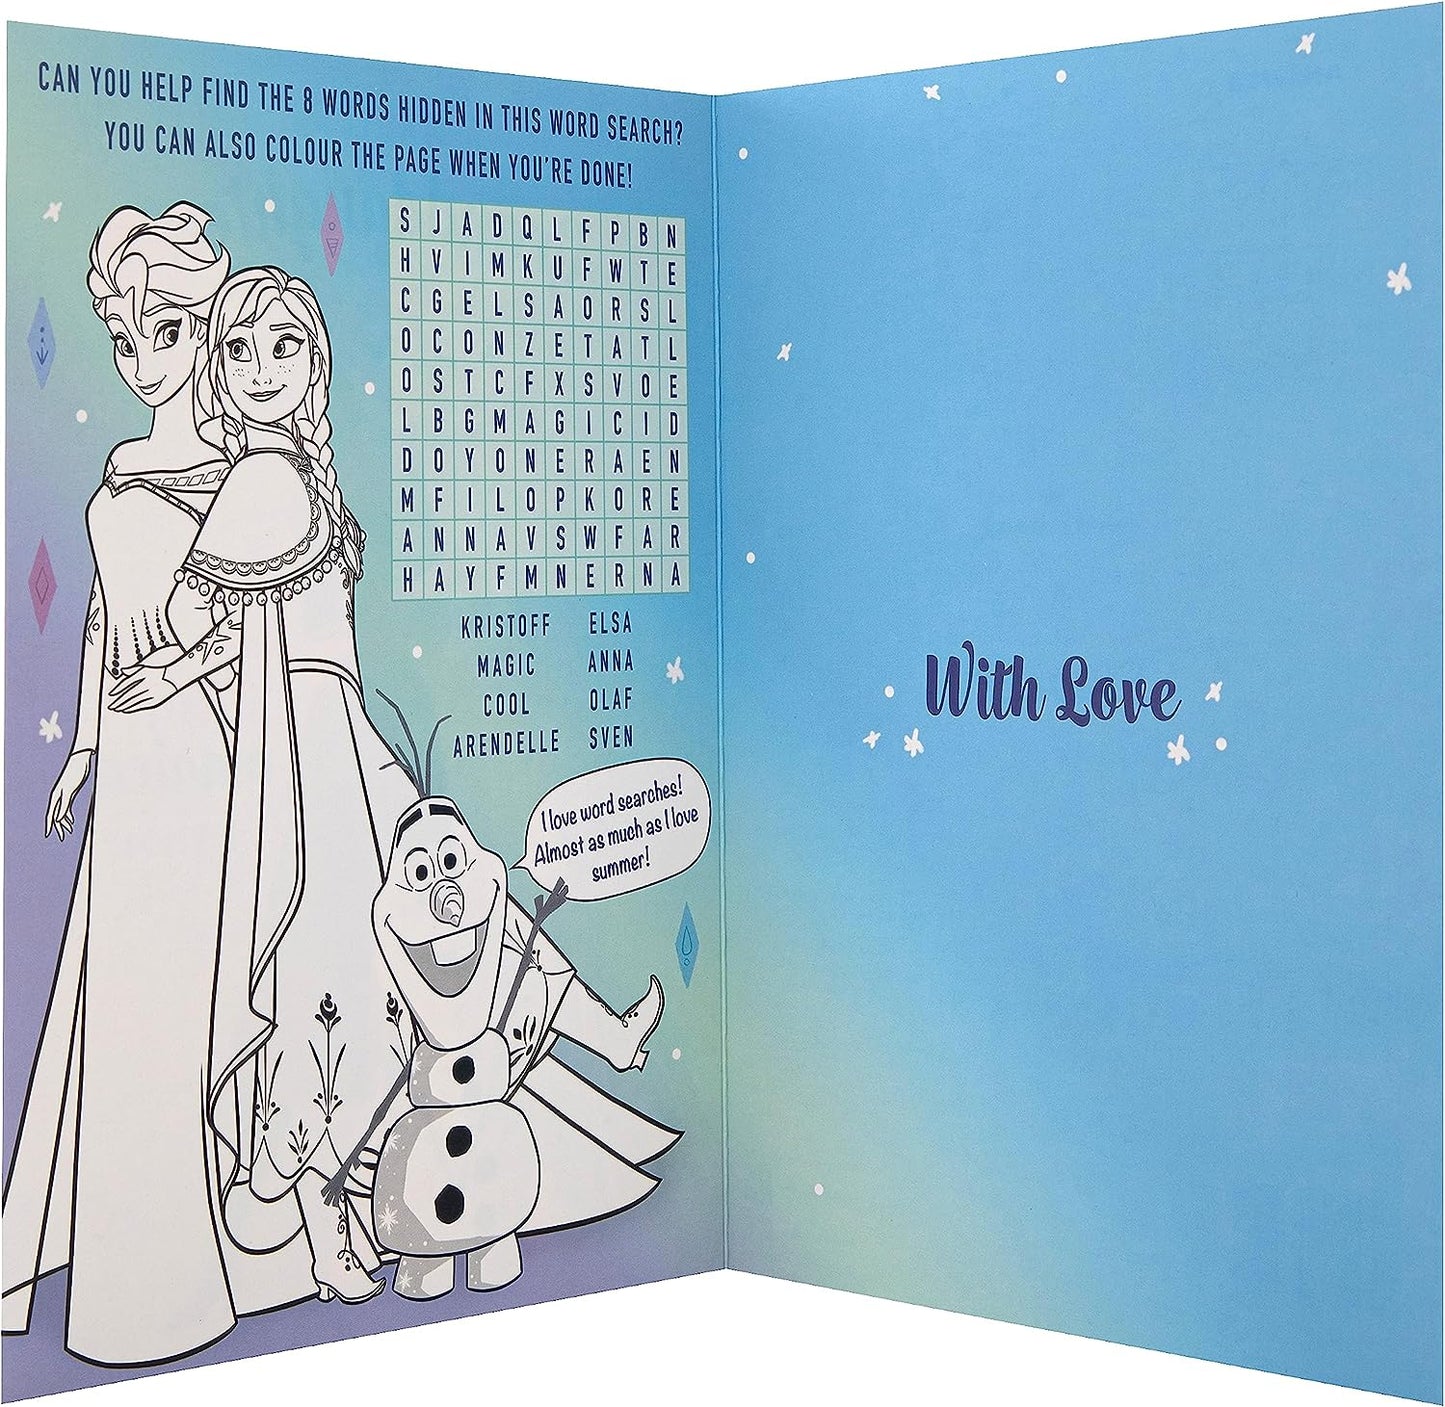 Disney Frozen Design with Activity Granddaughter Birthday Card